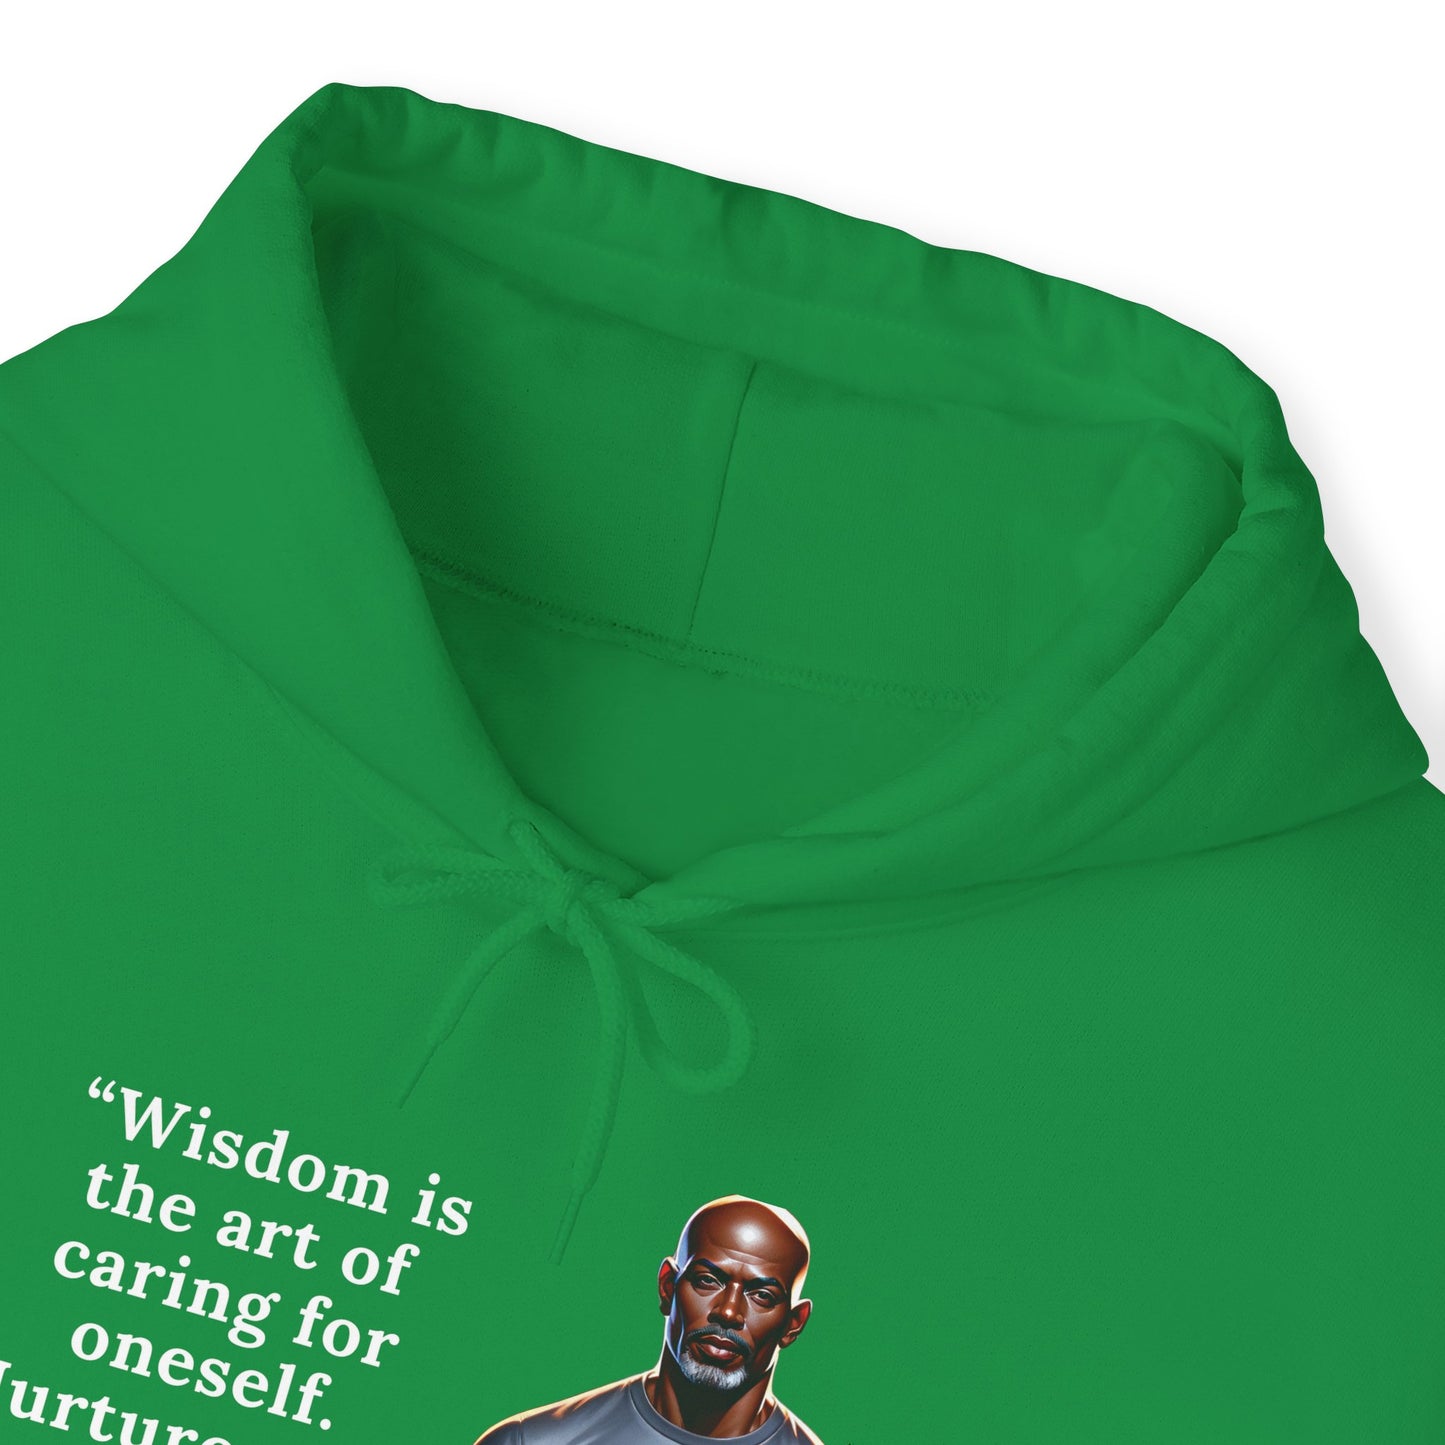 Lead With Wisdom Hooded Sweatshirt